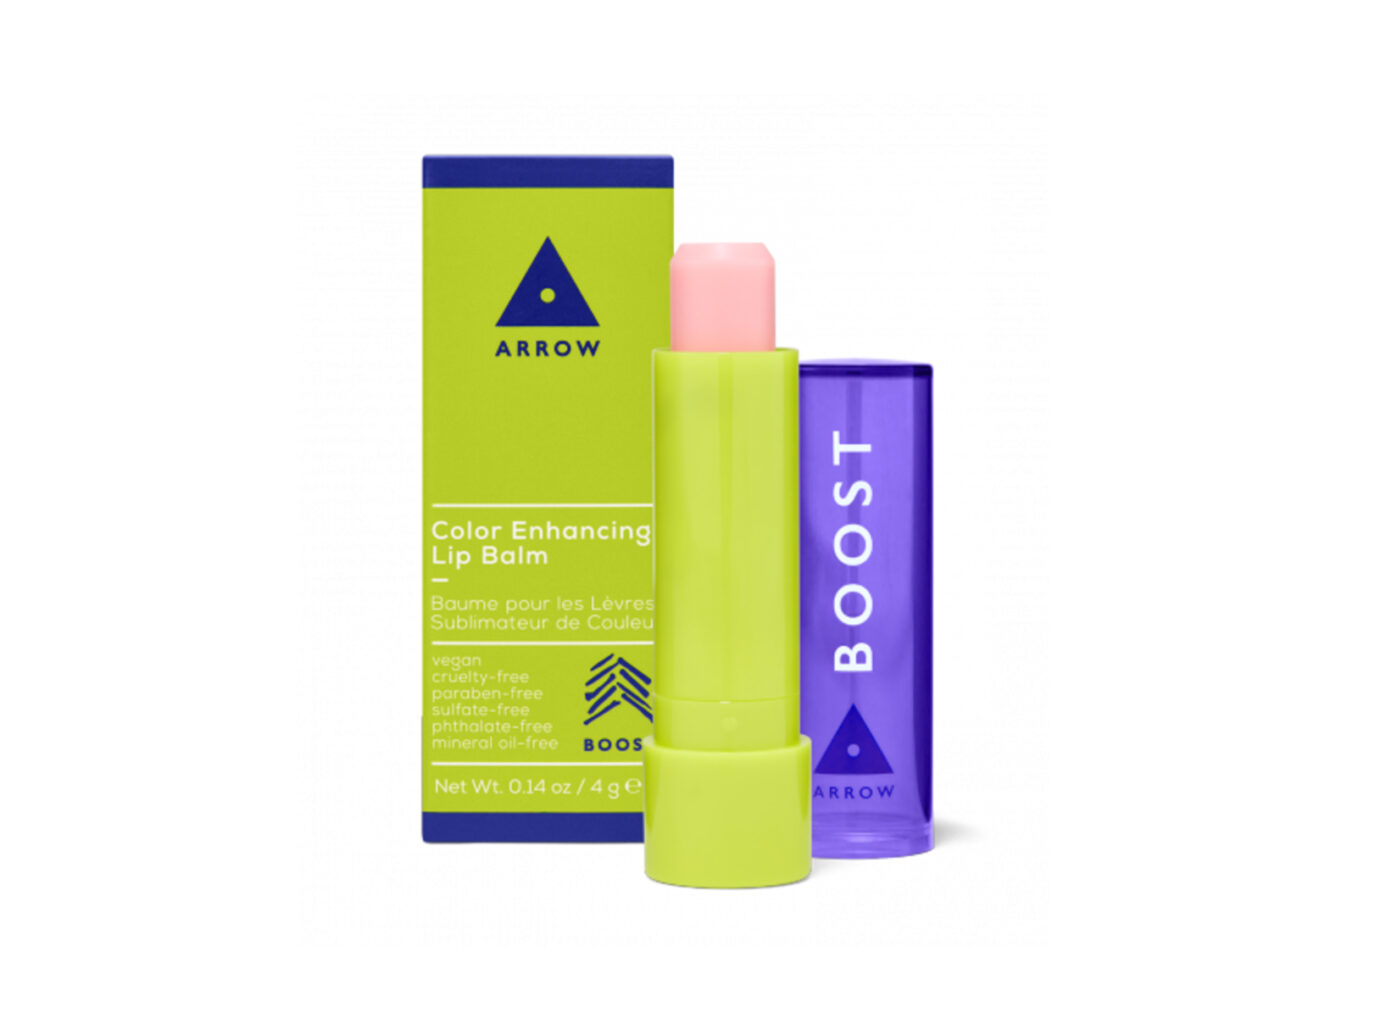 Birchbox ARROW Color Enhancing Lip Balm